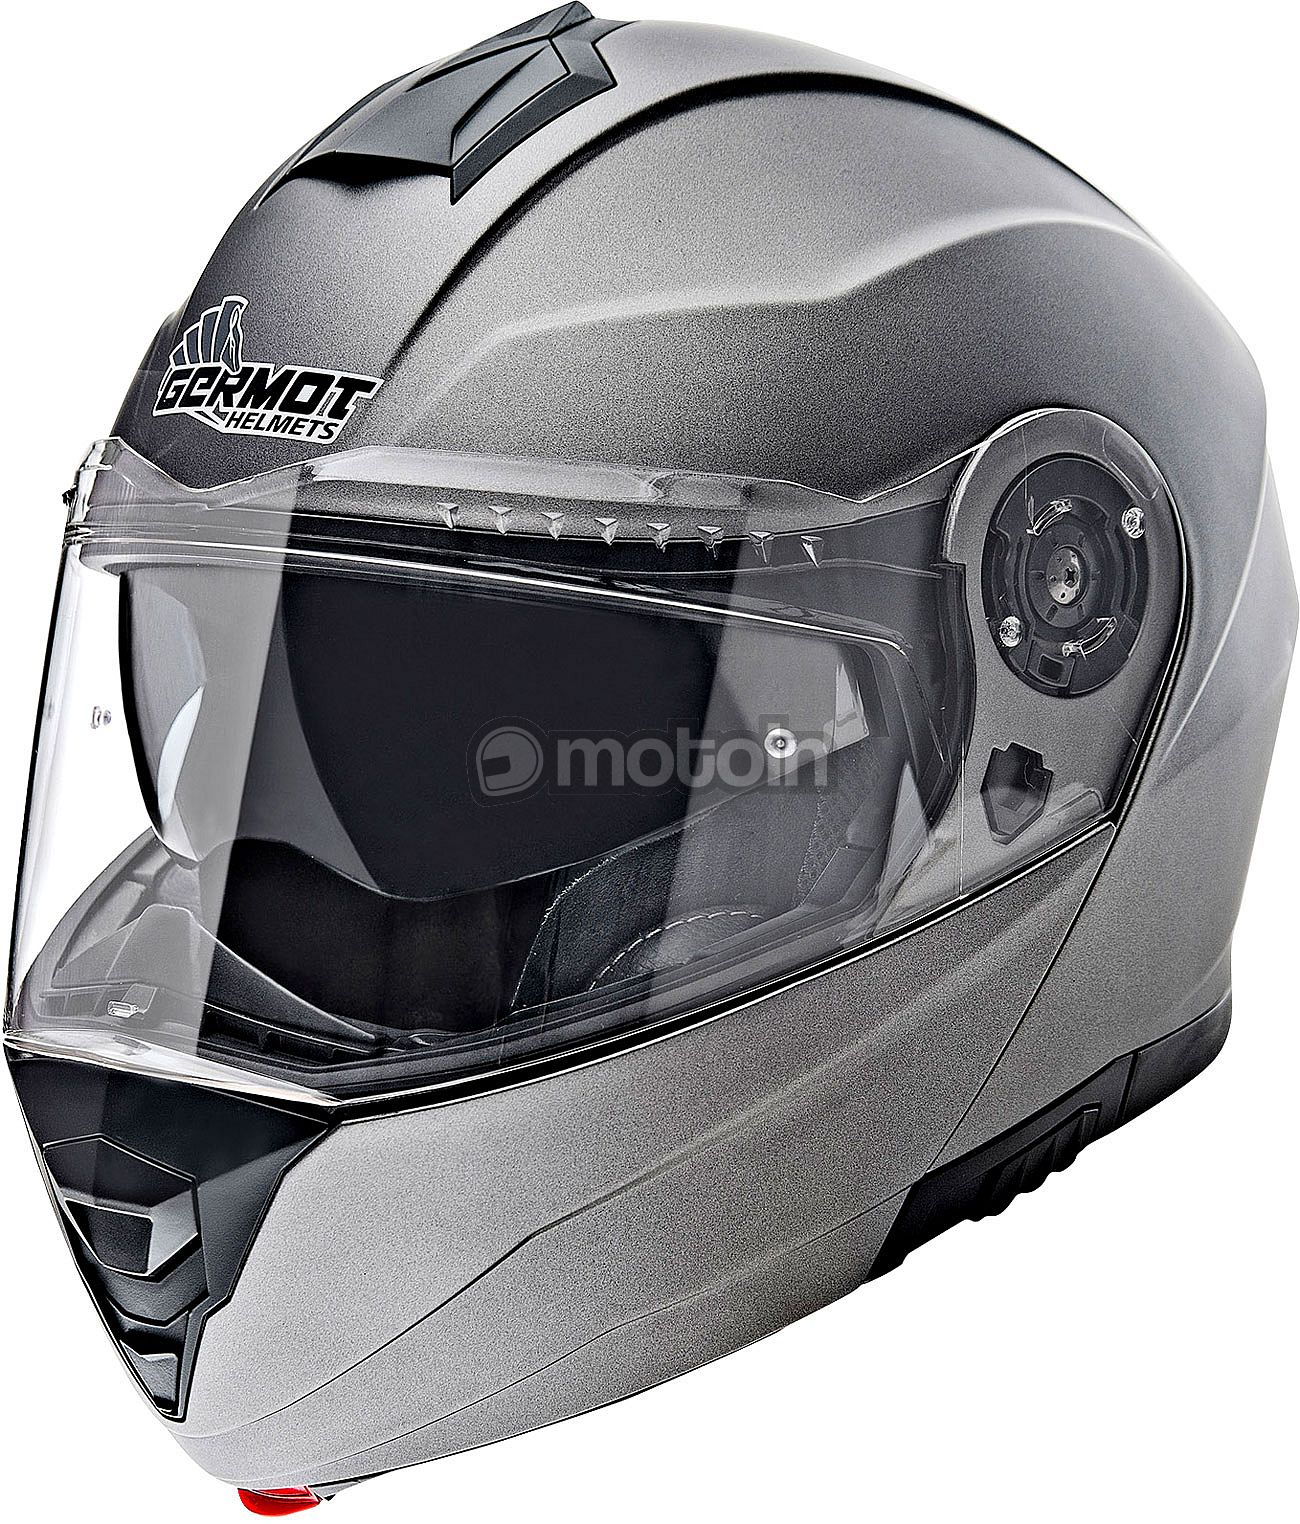 Germot GM 960, flip-up hjelm